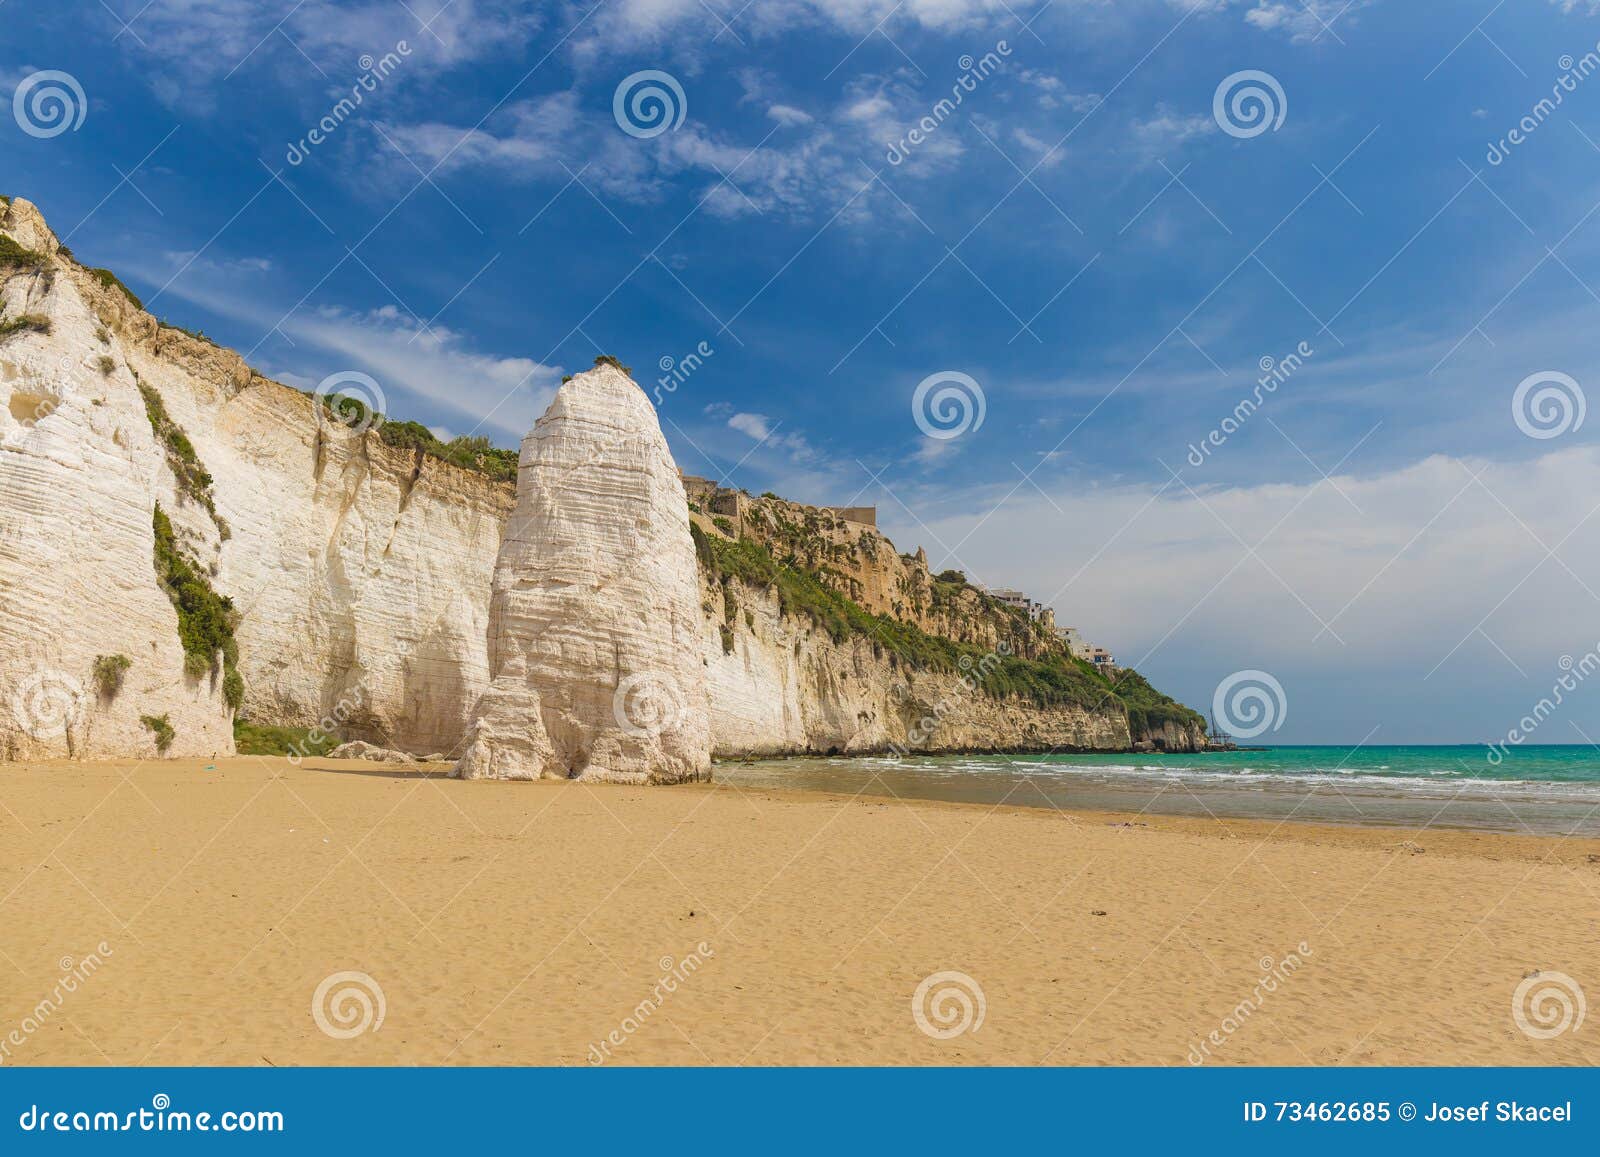 golden sand beach of vieste with pizzomunno rock, gargano peninsula, apulia, south of italy